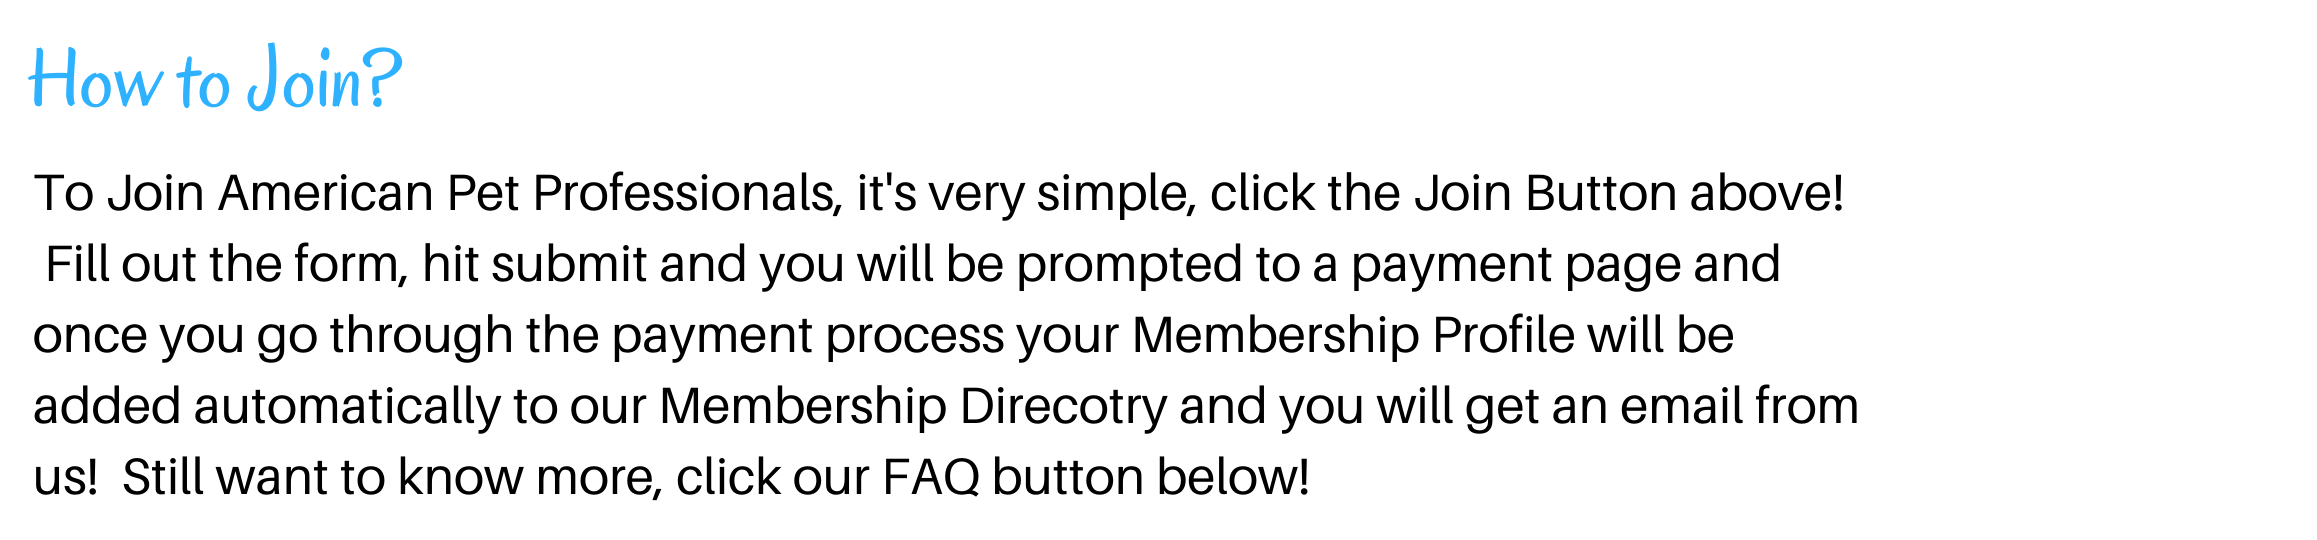 Membership benefits July 2020 page 4